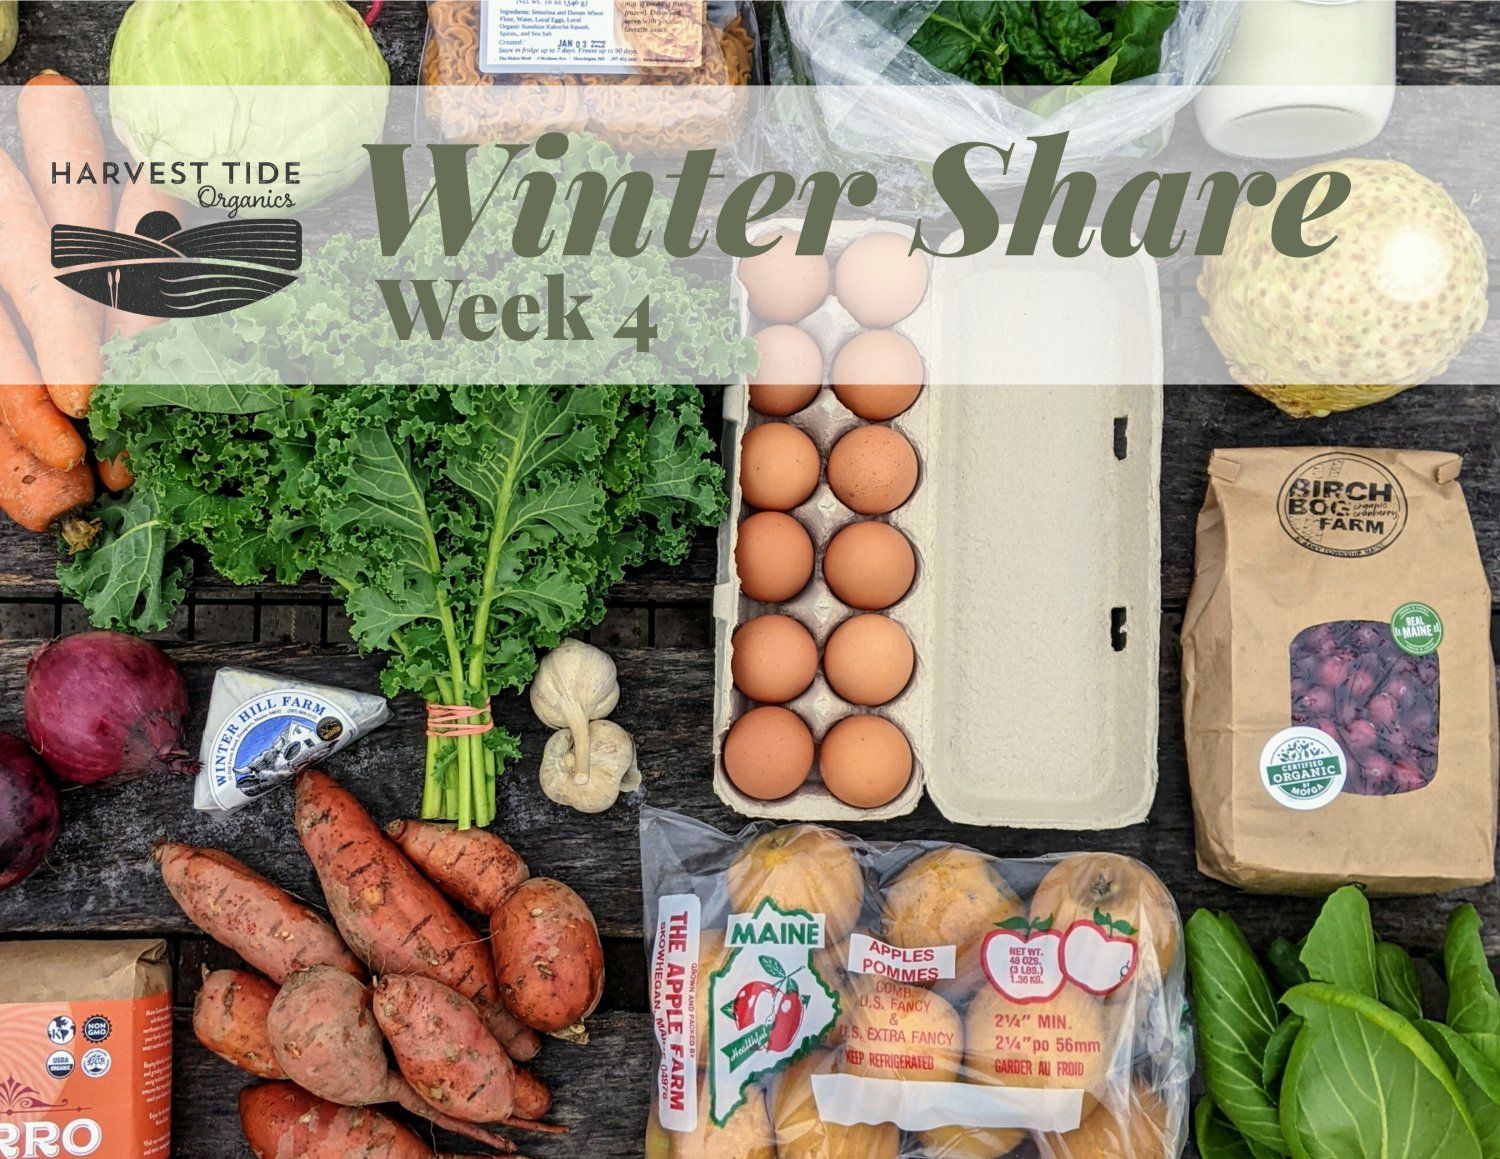 Next Happening: Winter Harvest Share - Week 4